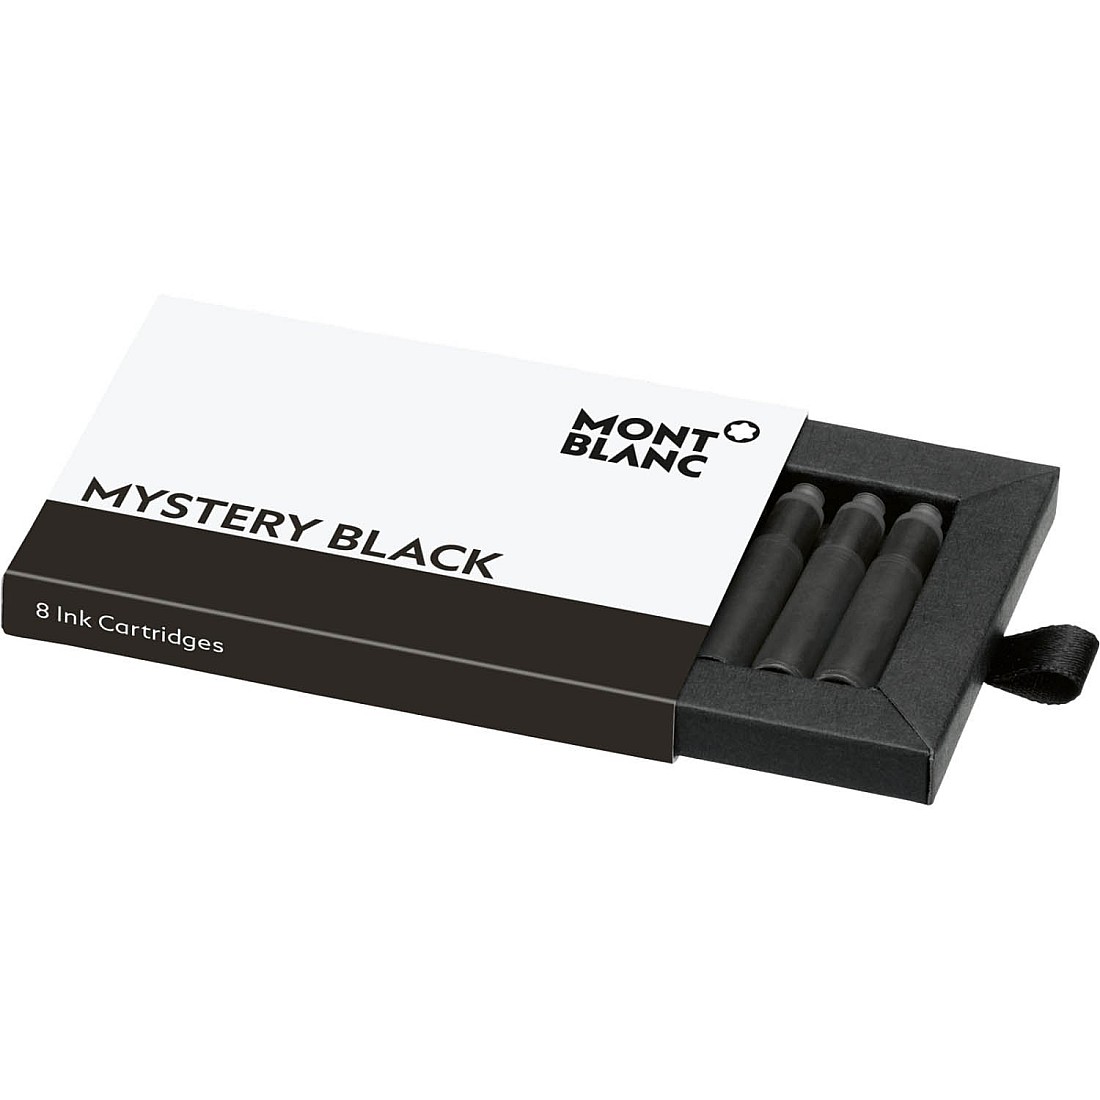 Montblanc Ink Cartridges Mystery Black 105191